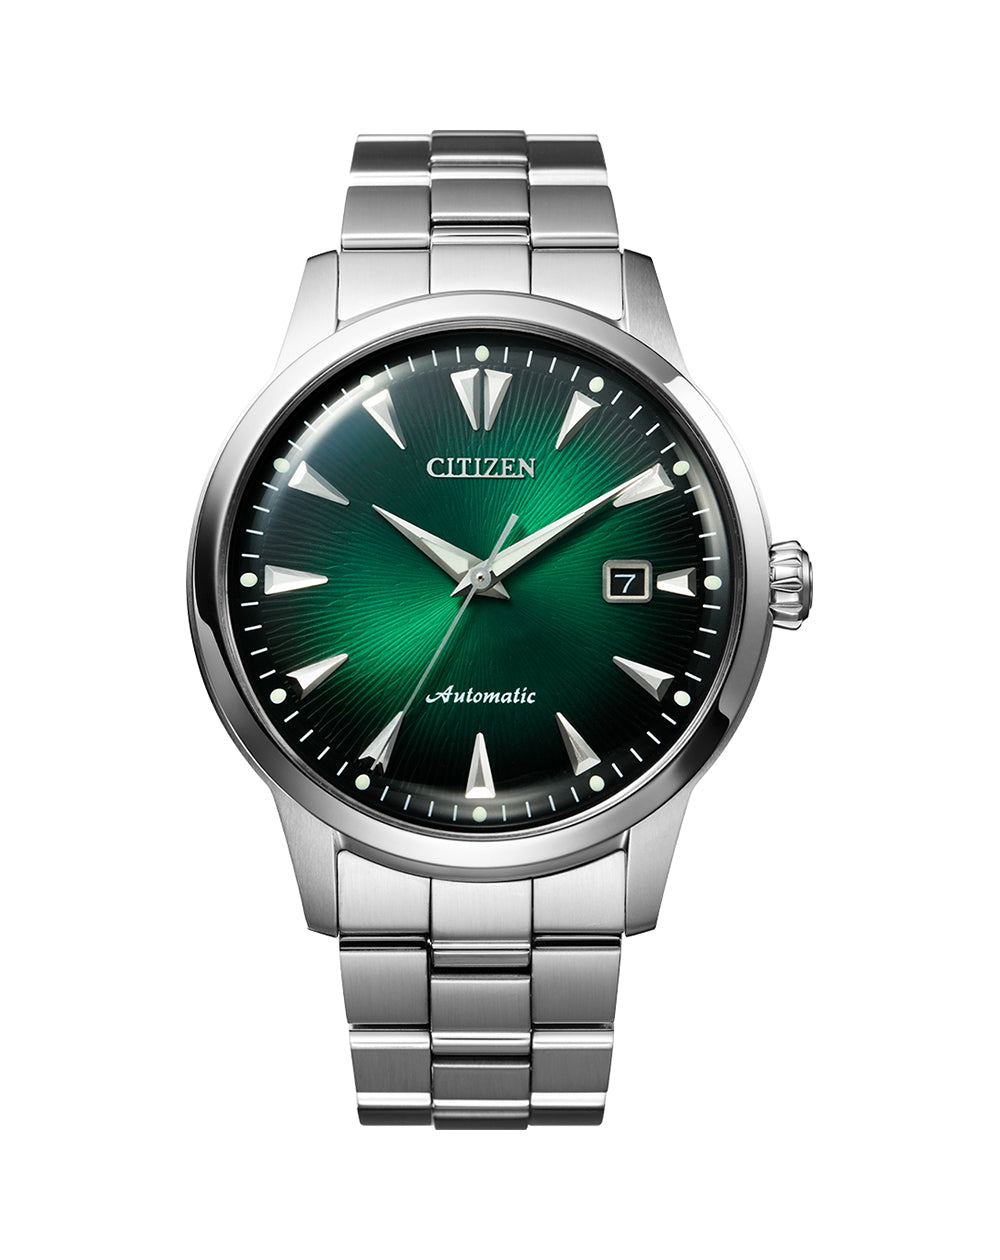 Citizen Retro Style Automatic Watches